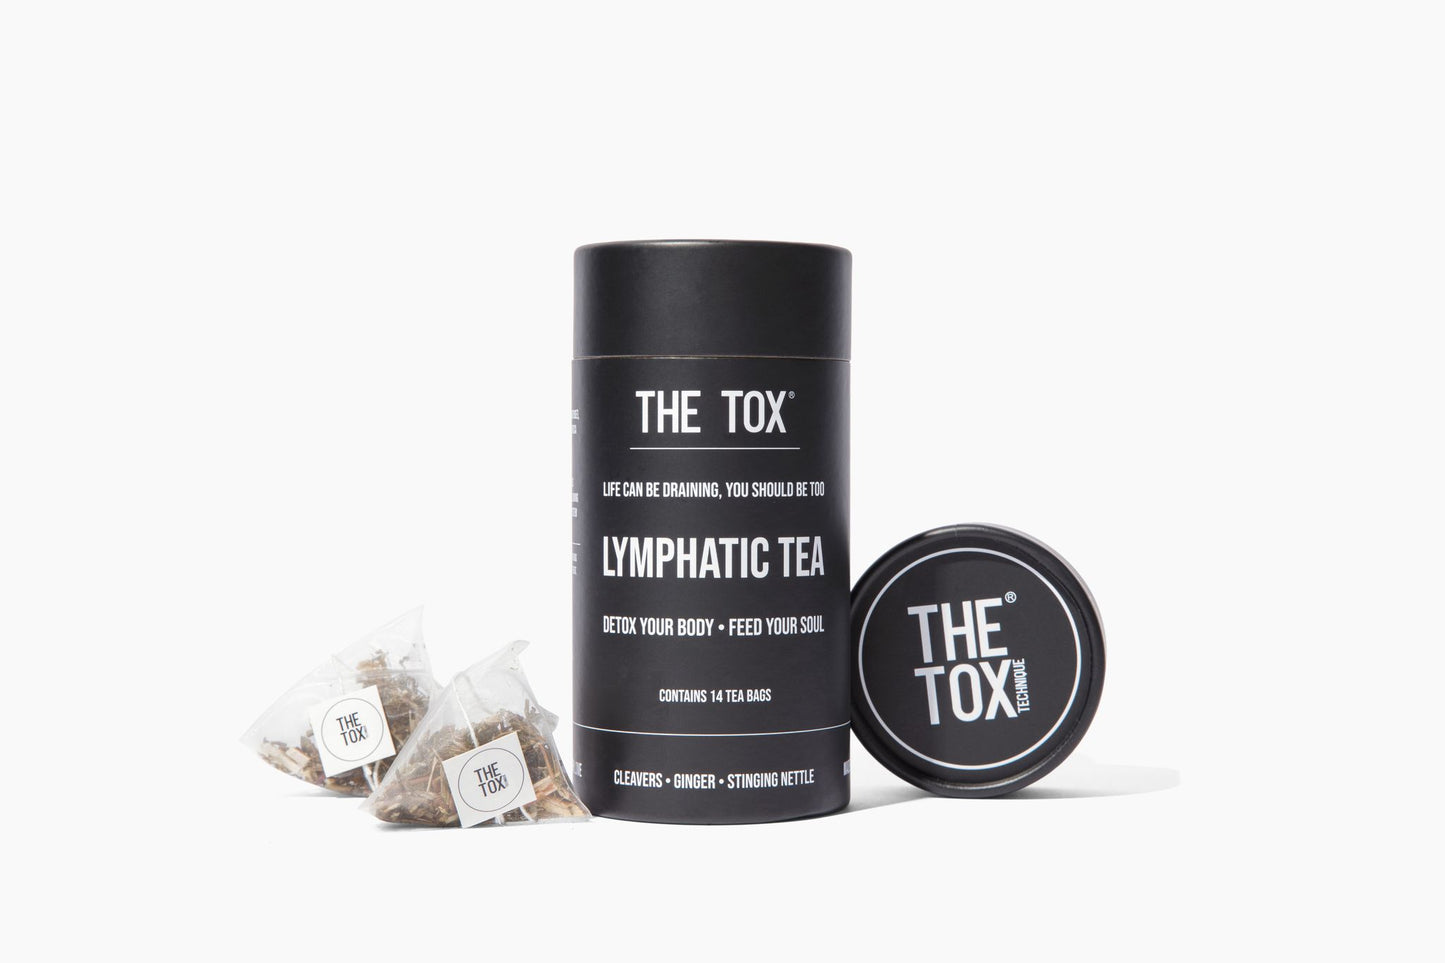 The Tox Lymphatic Tea